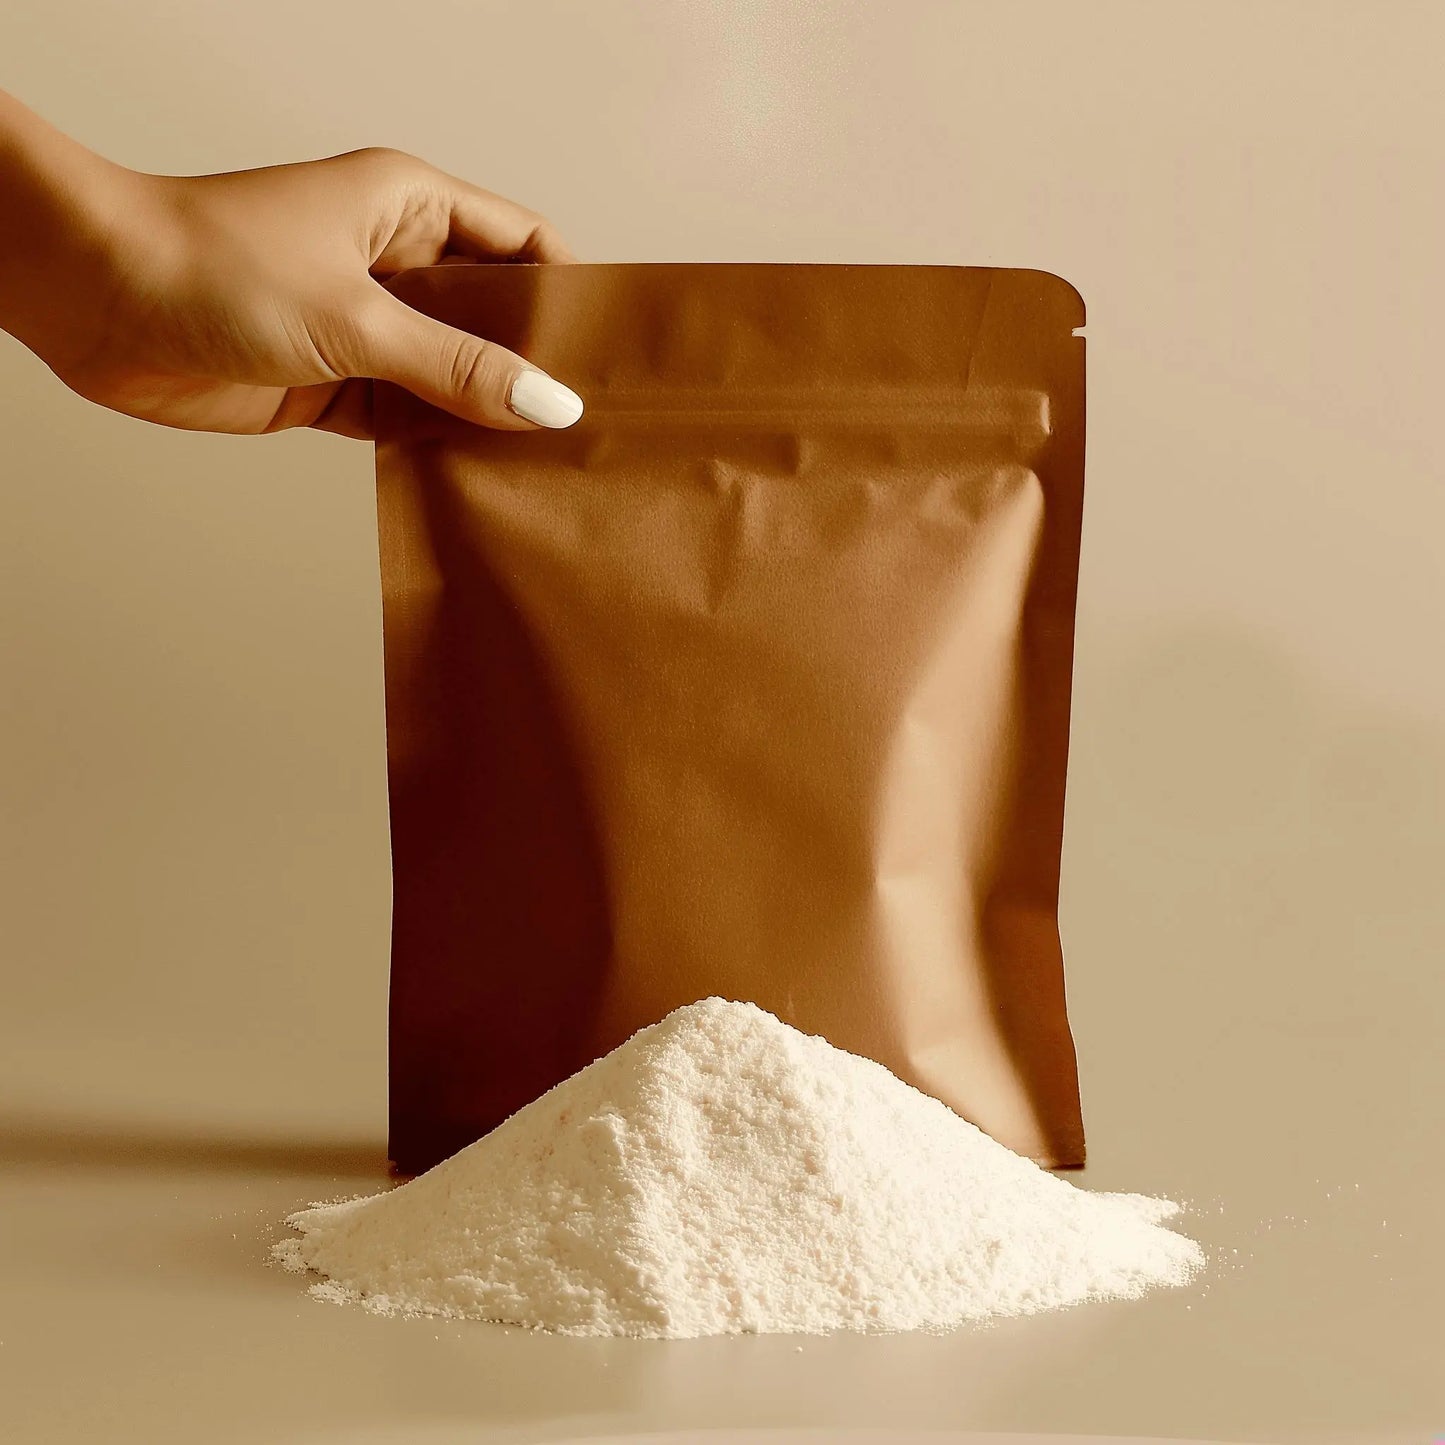 Vegan coconut milk powder 40% fat